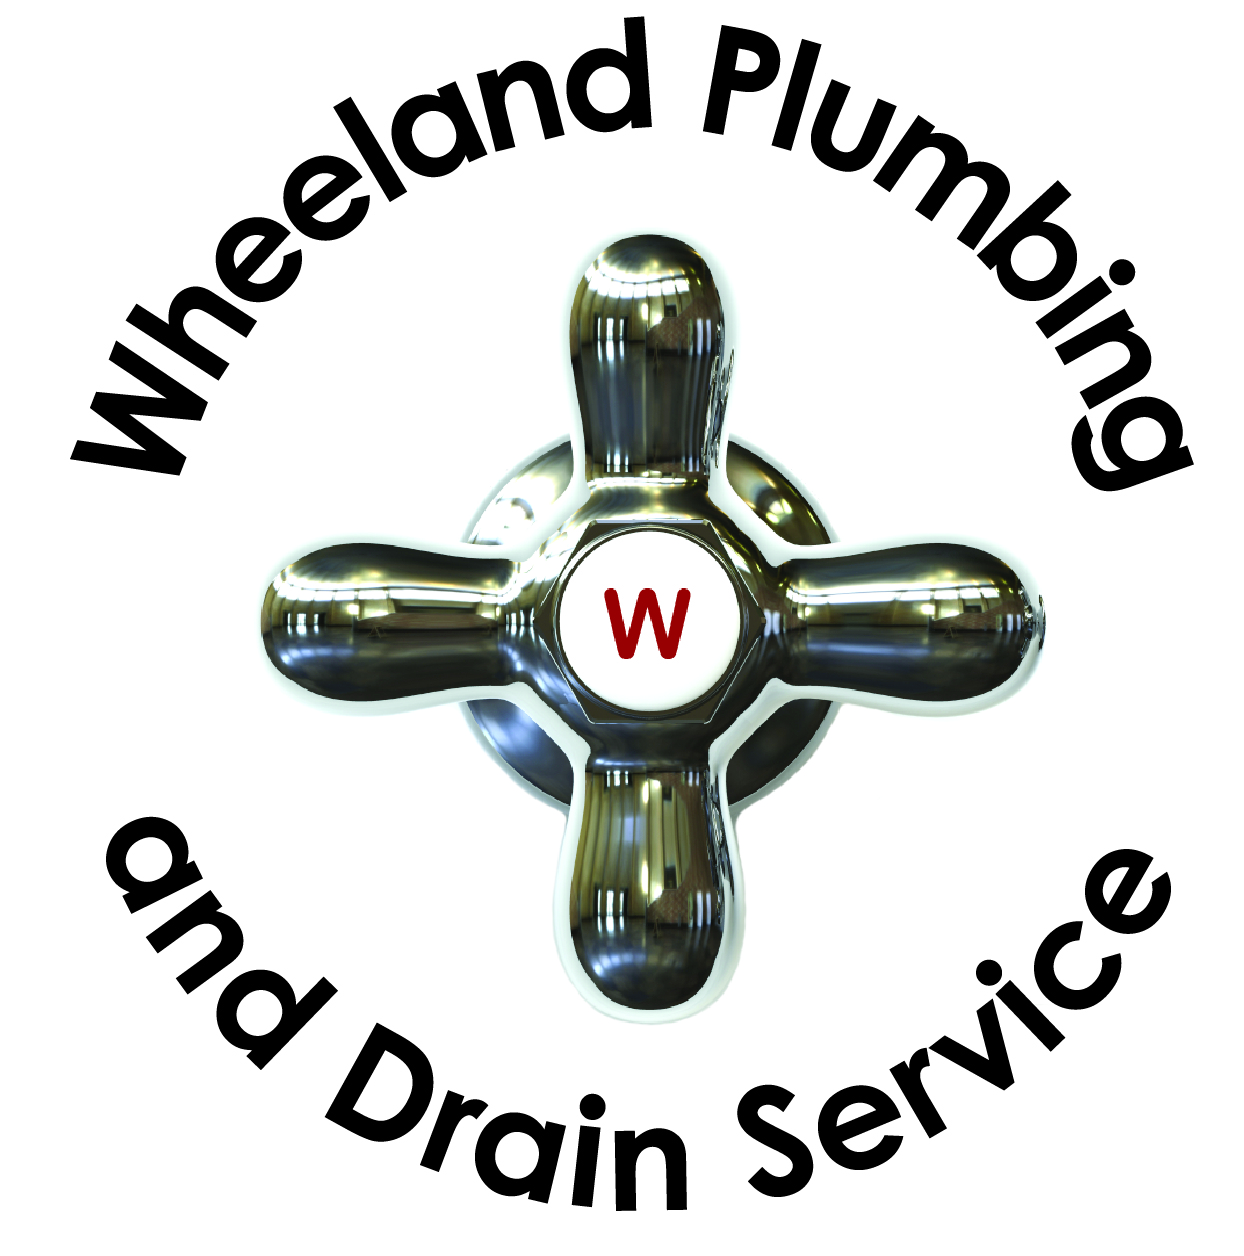 Wheeland Plumbing and Drain Service